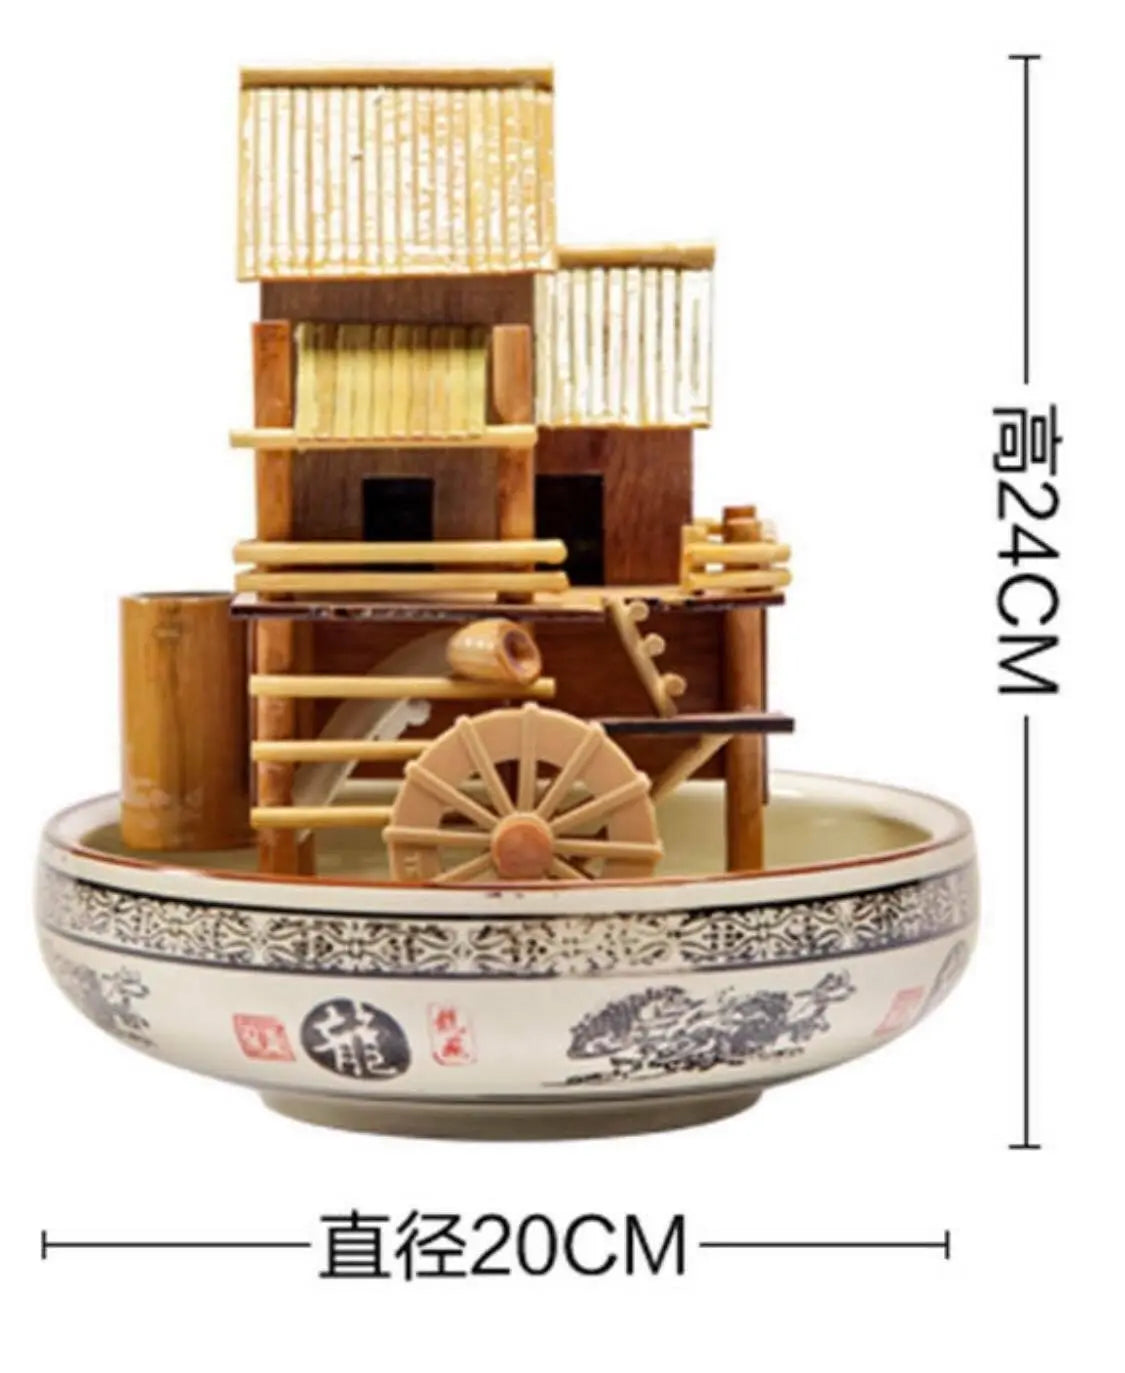 Bamboo Handmade Handcrafted Indoor Water Feature Flowing Water Wheels Home Decor